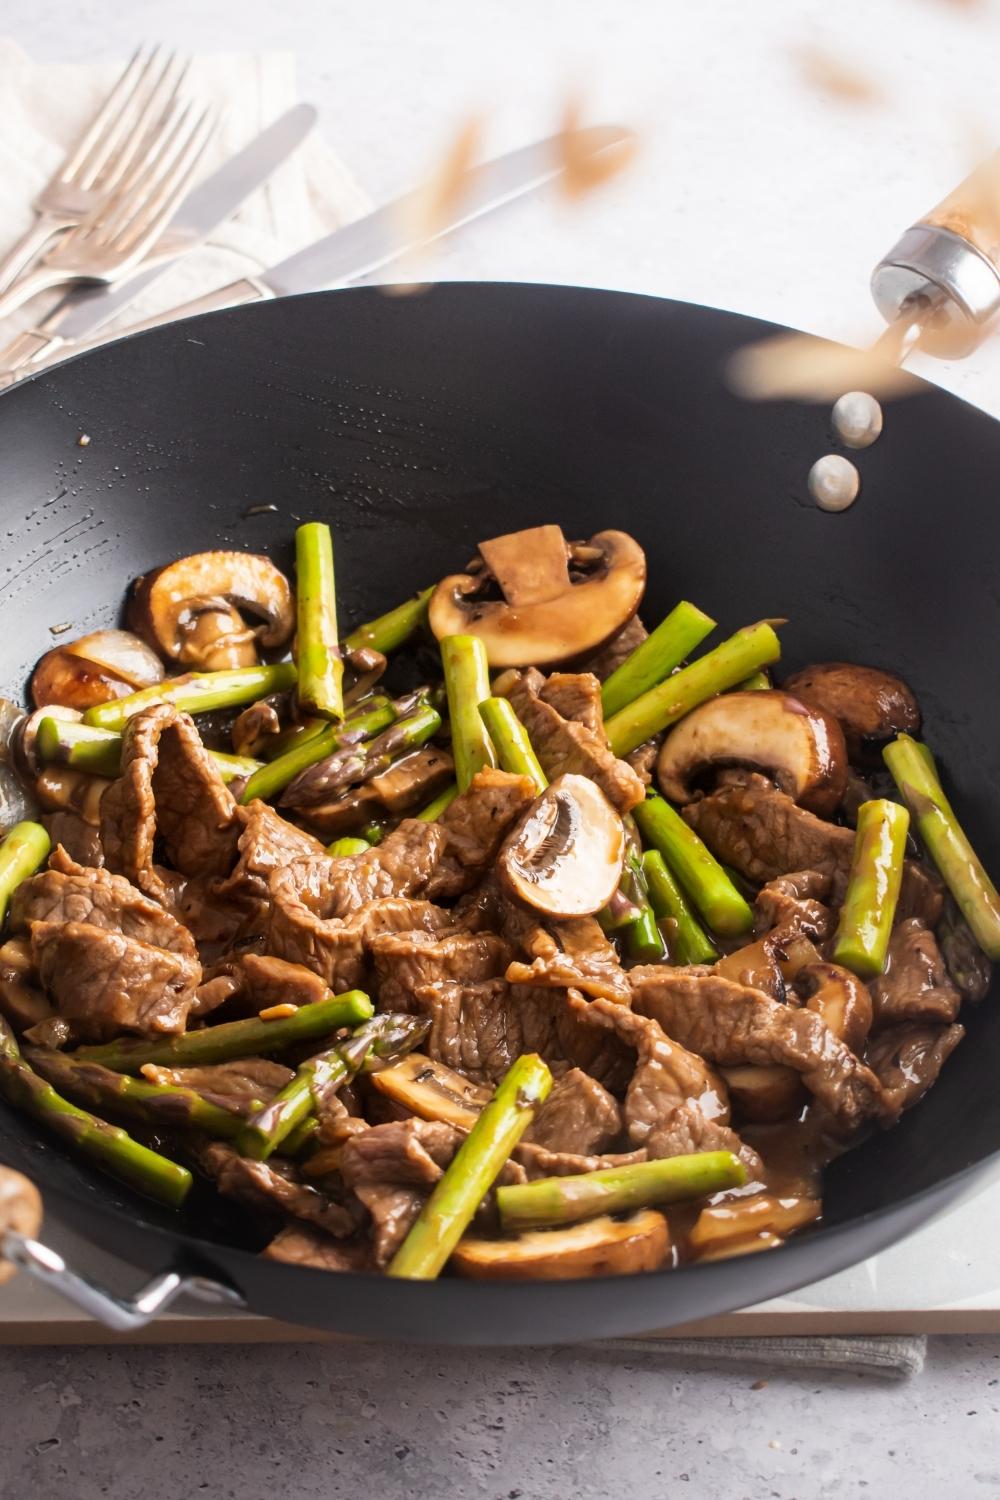 A wok filled angus steak, mushrooms, and asparagus.